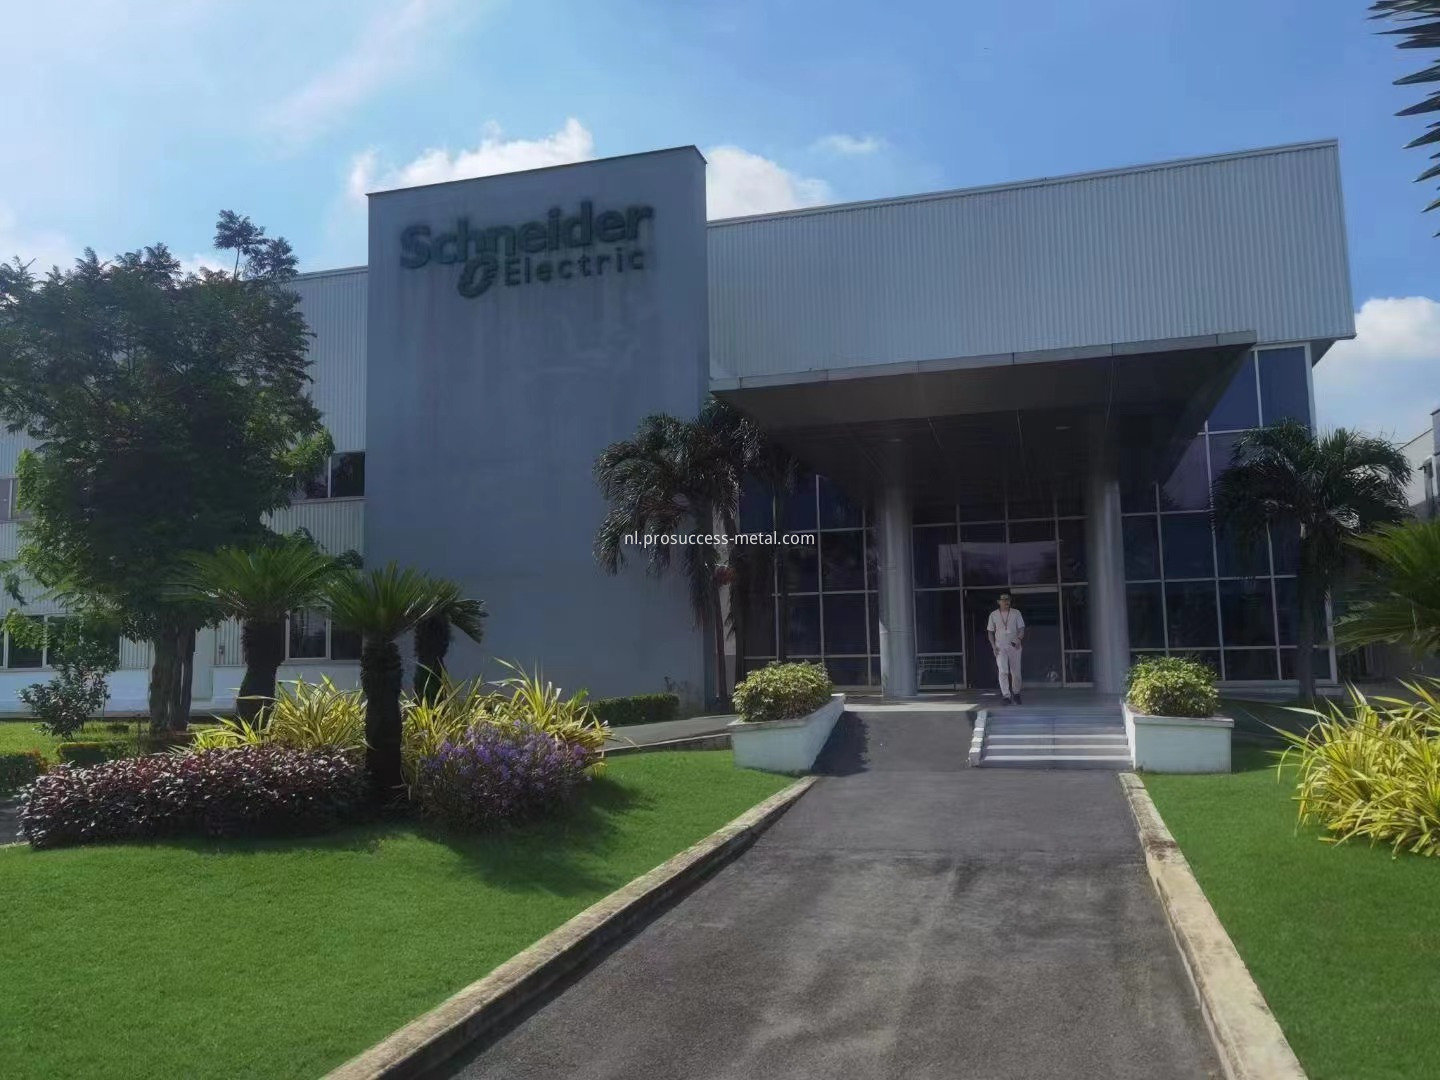 Schneider Electric Manufacturing Plants